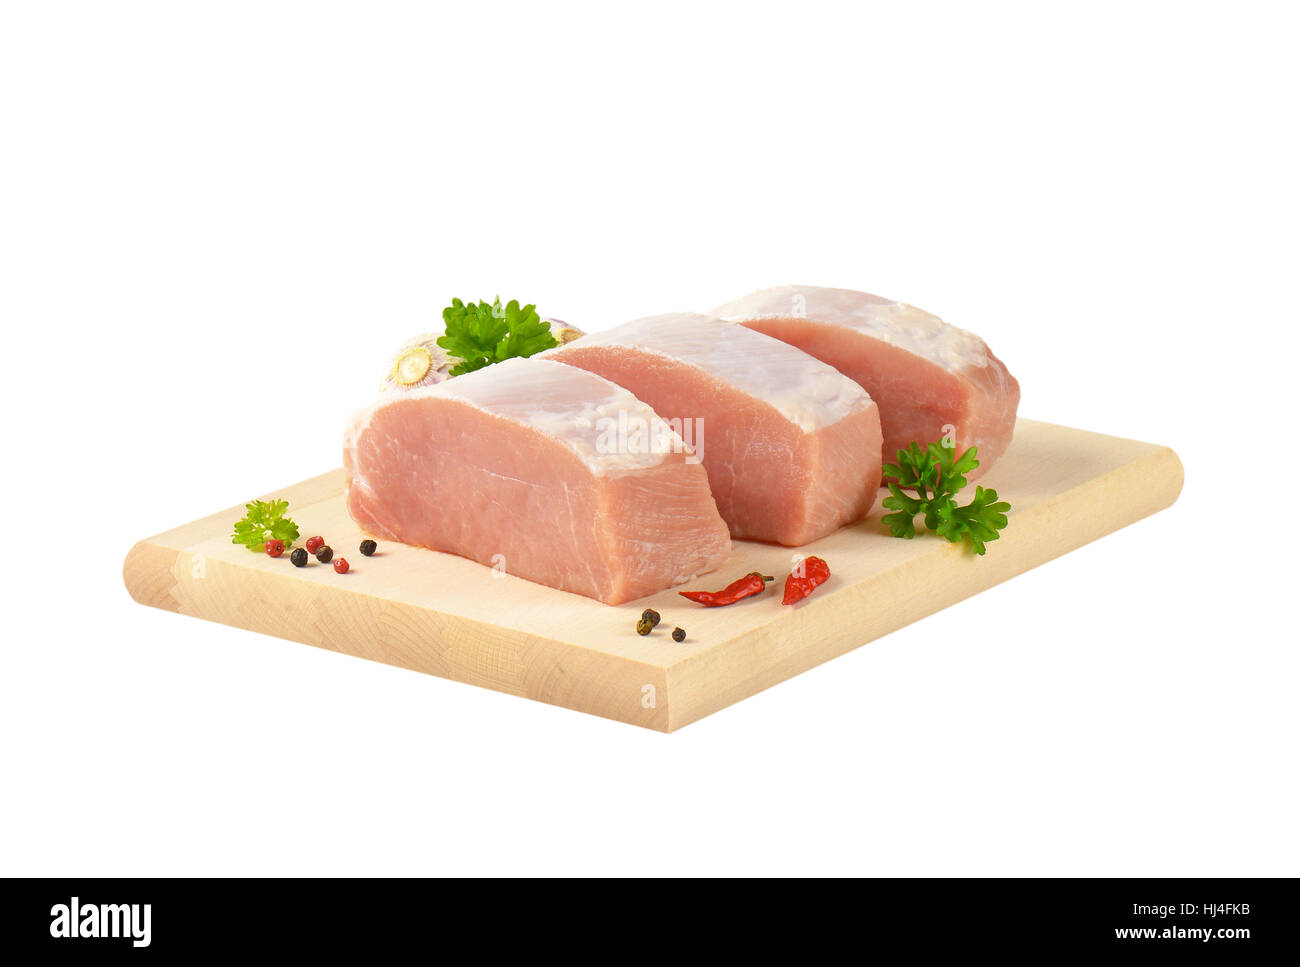 Slices of fresh boneless pork loin on cutting board Stock Photo